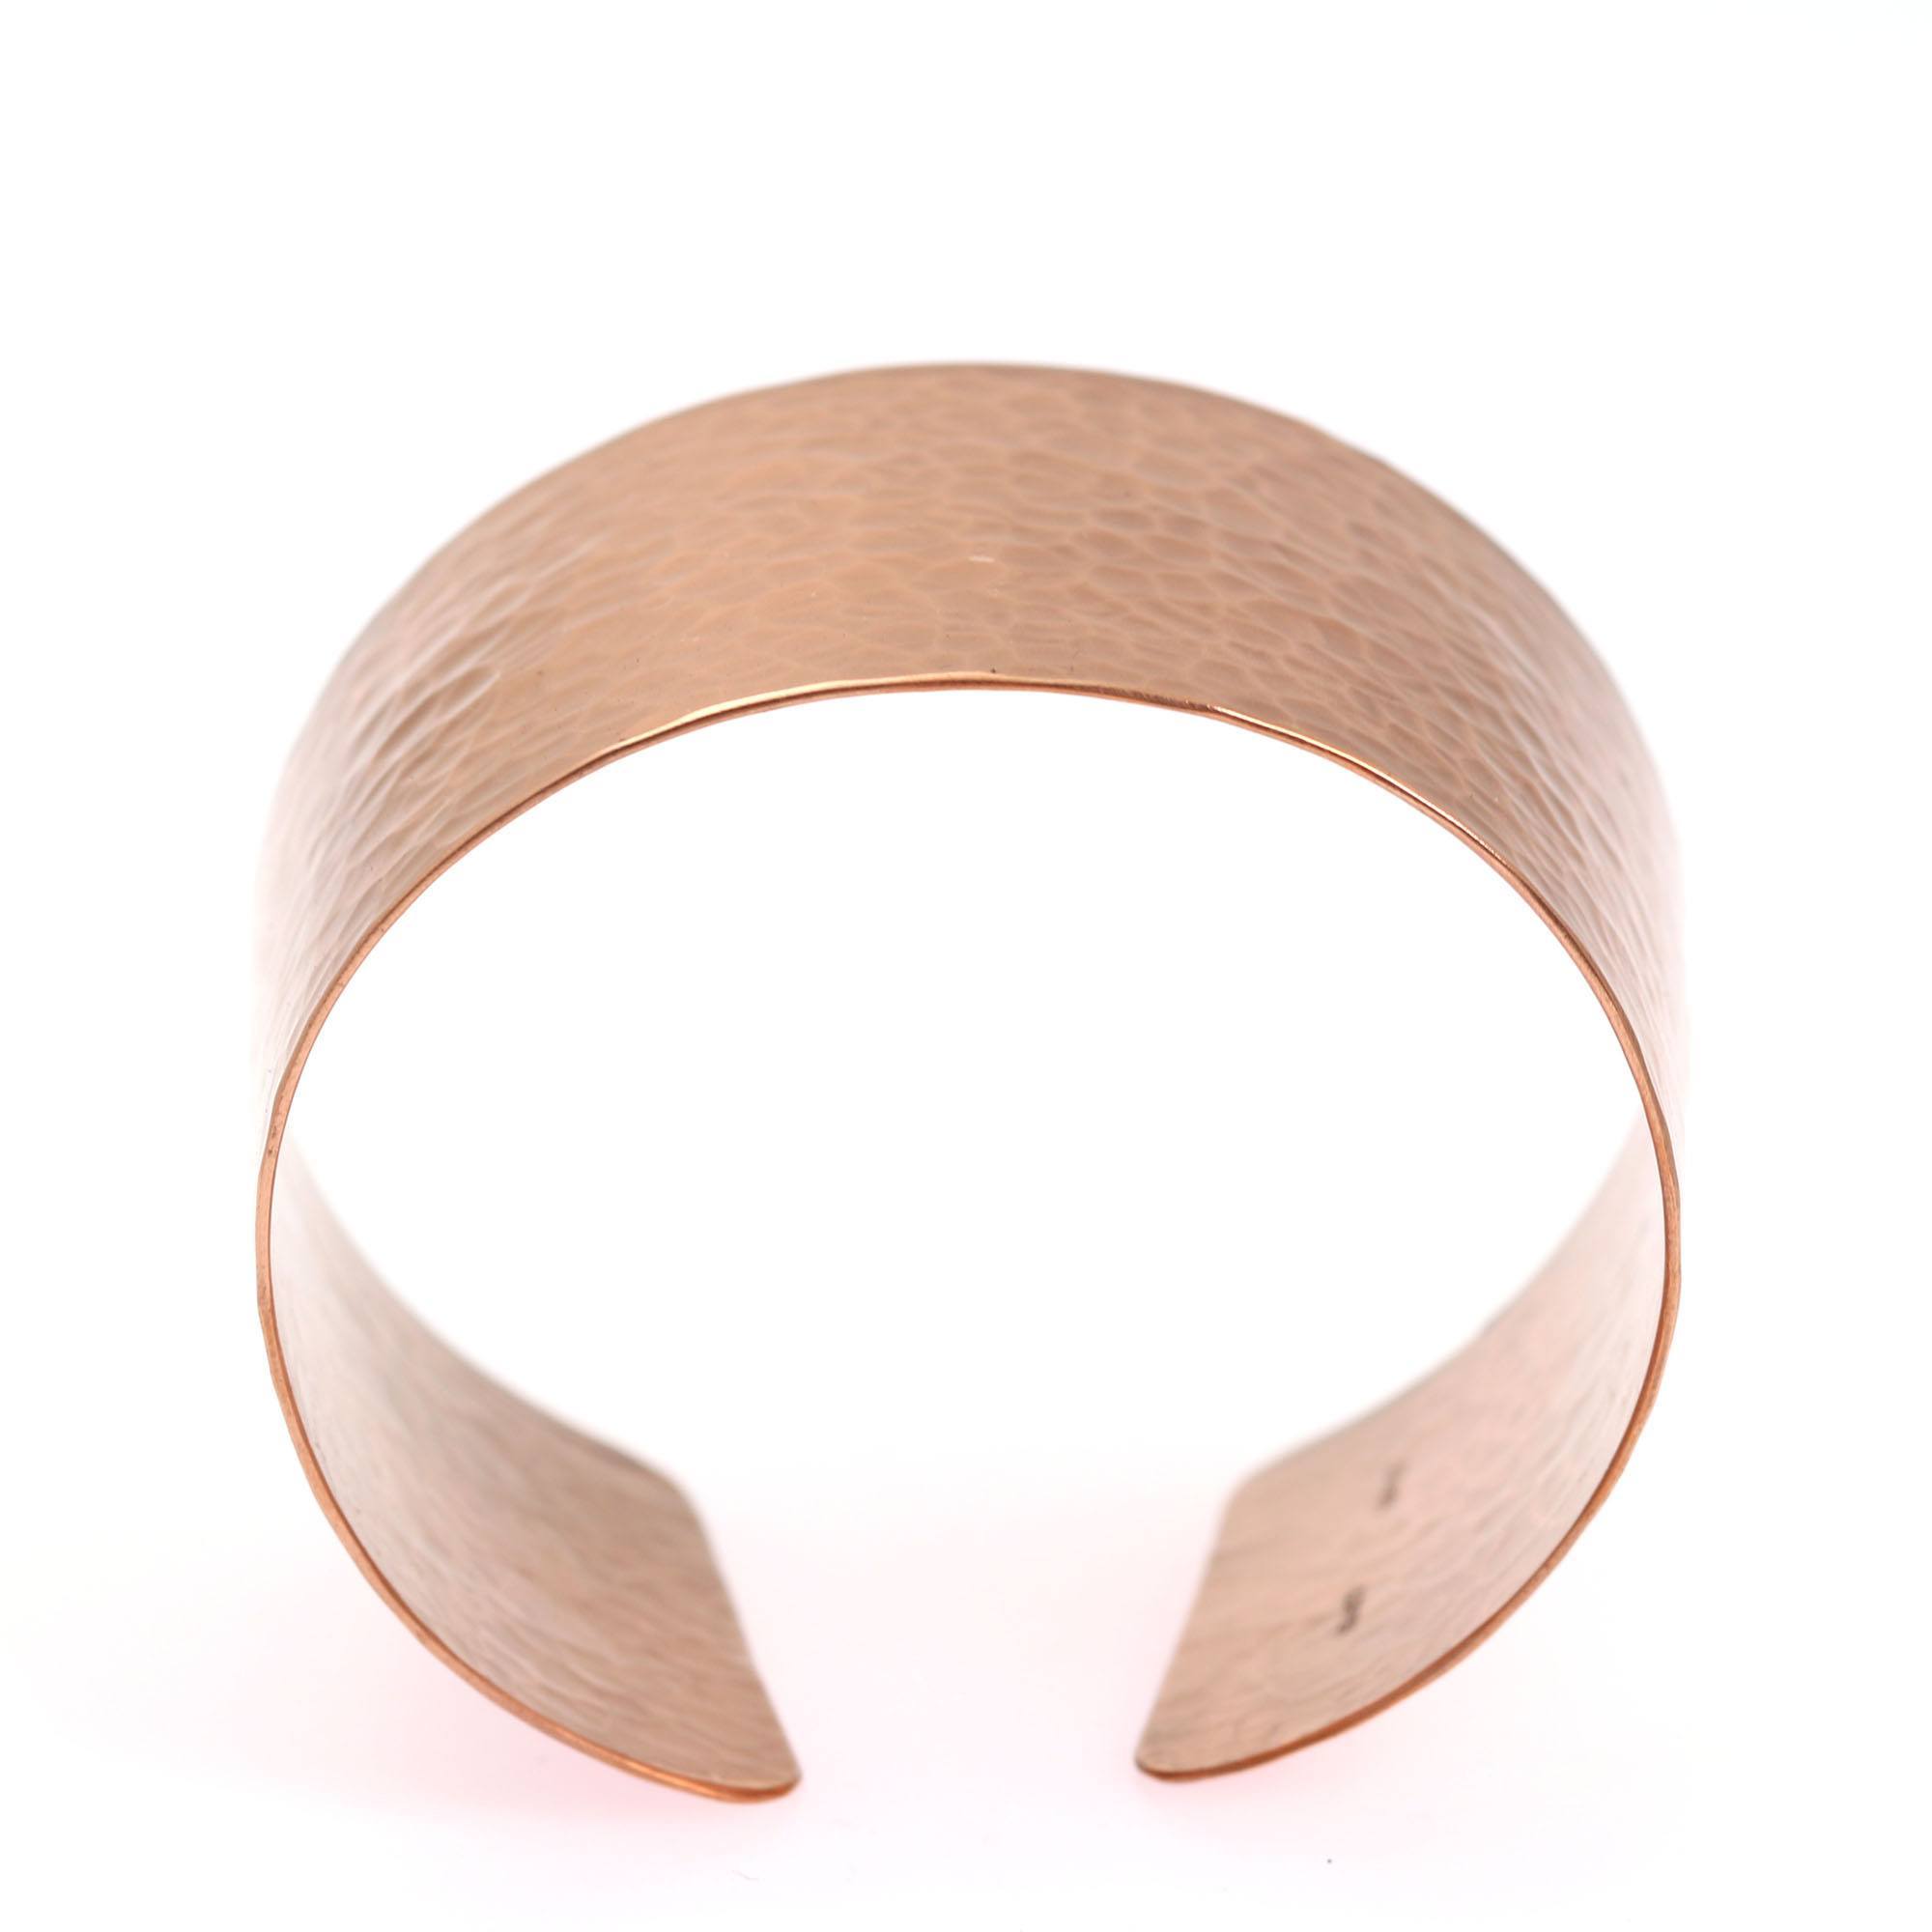 Shape of Hammered Copper Cuff Bracelet